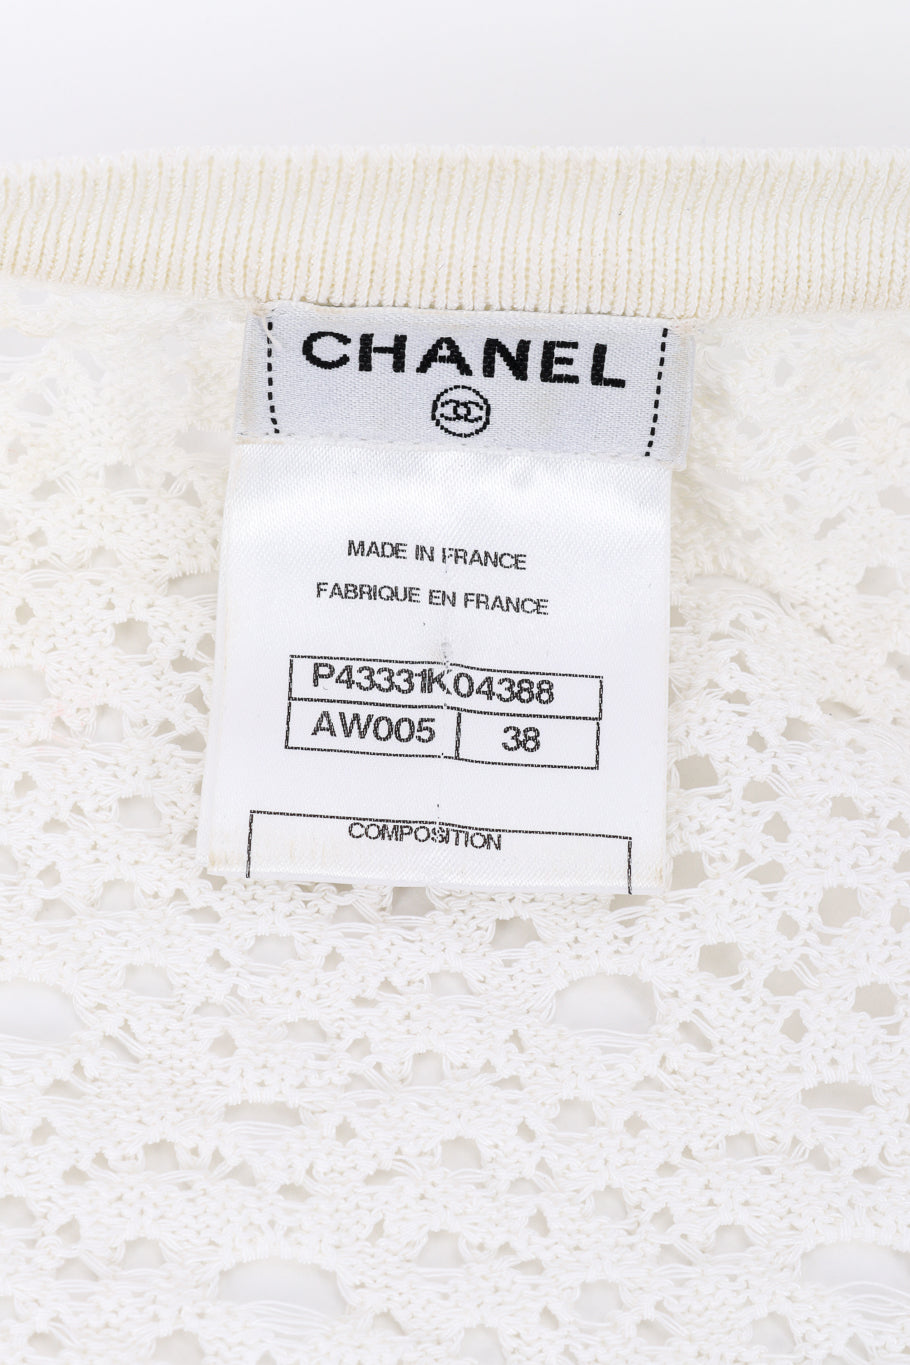 Vintage Chanel 2005 A/W Hole Cardigan signature label @recessla